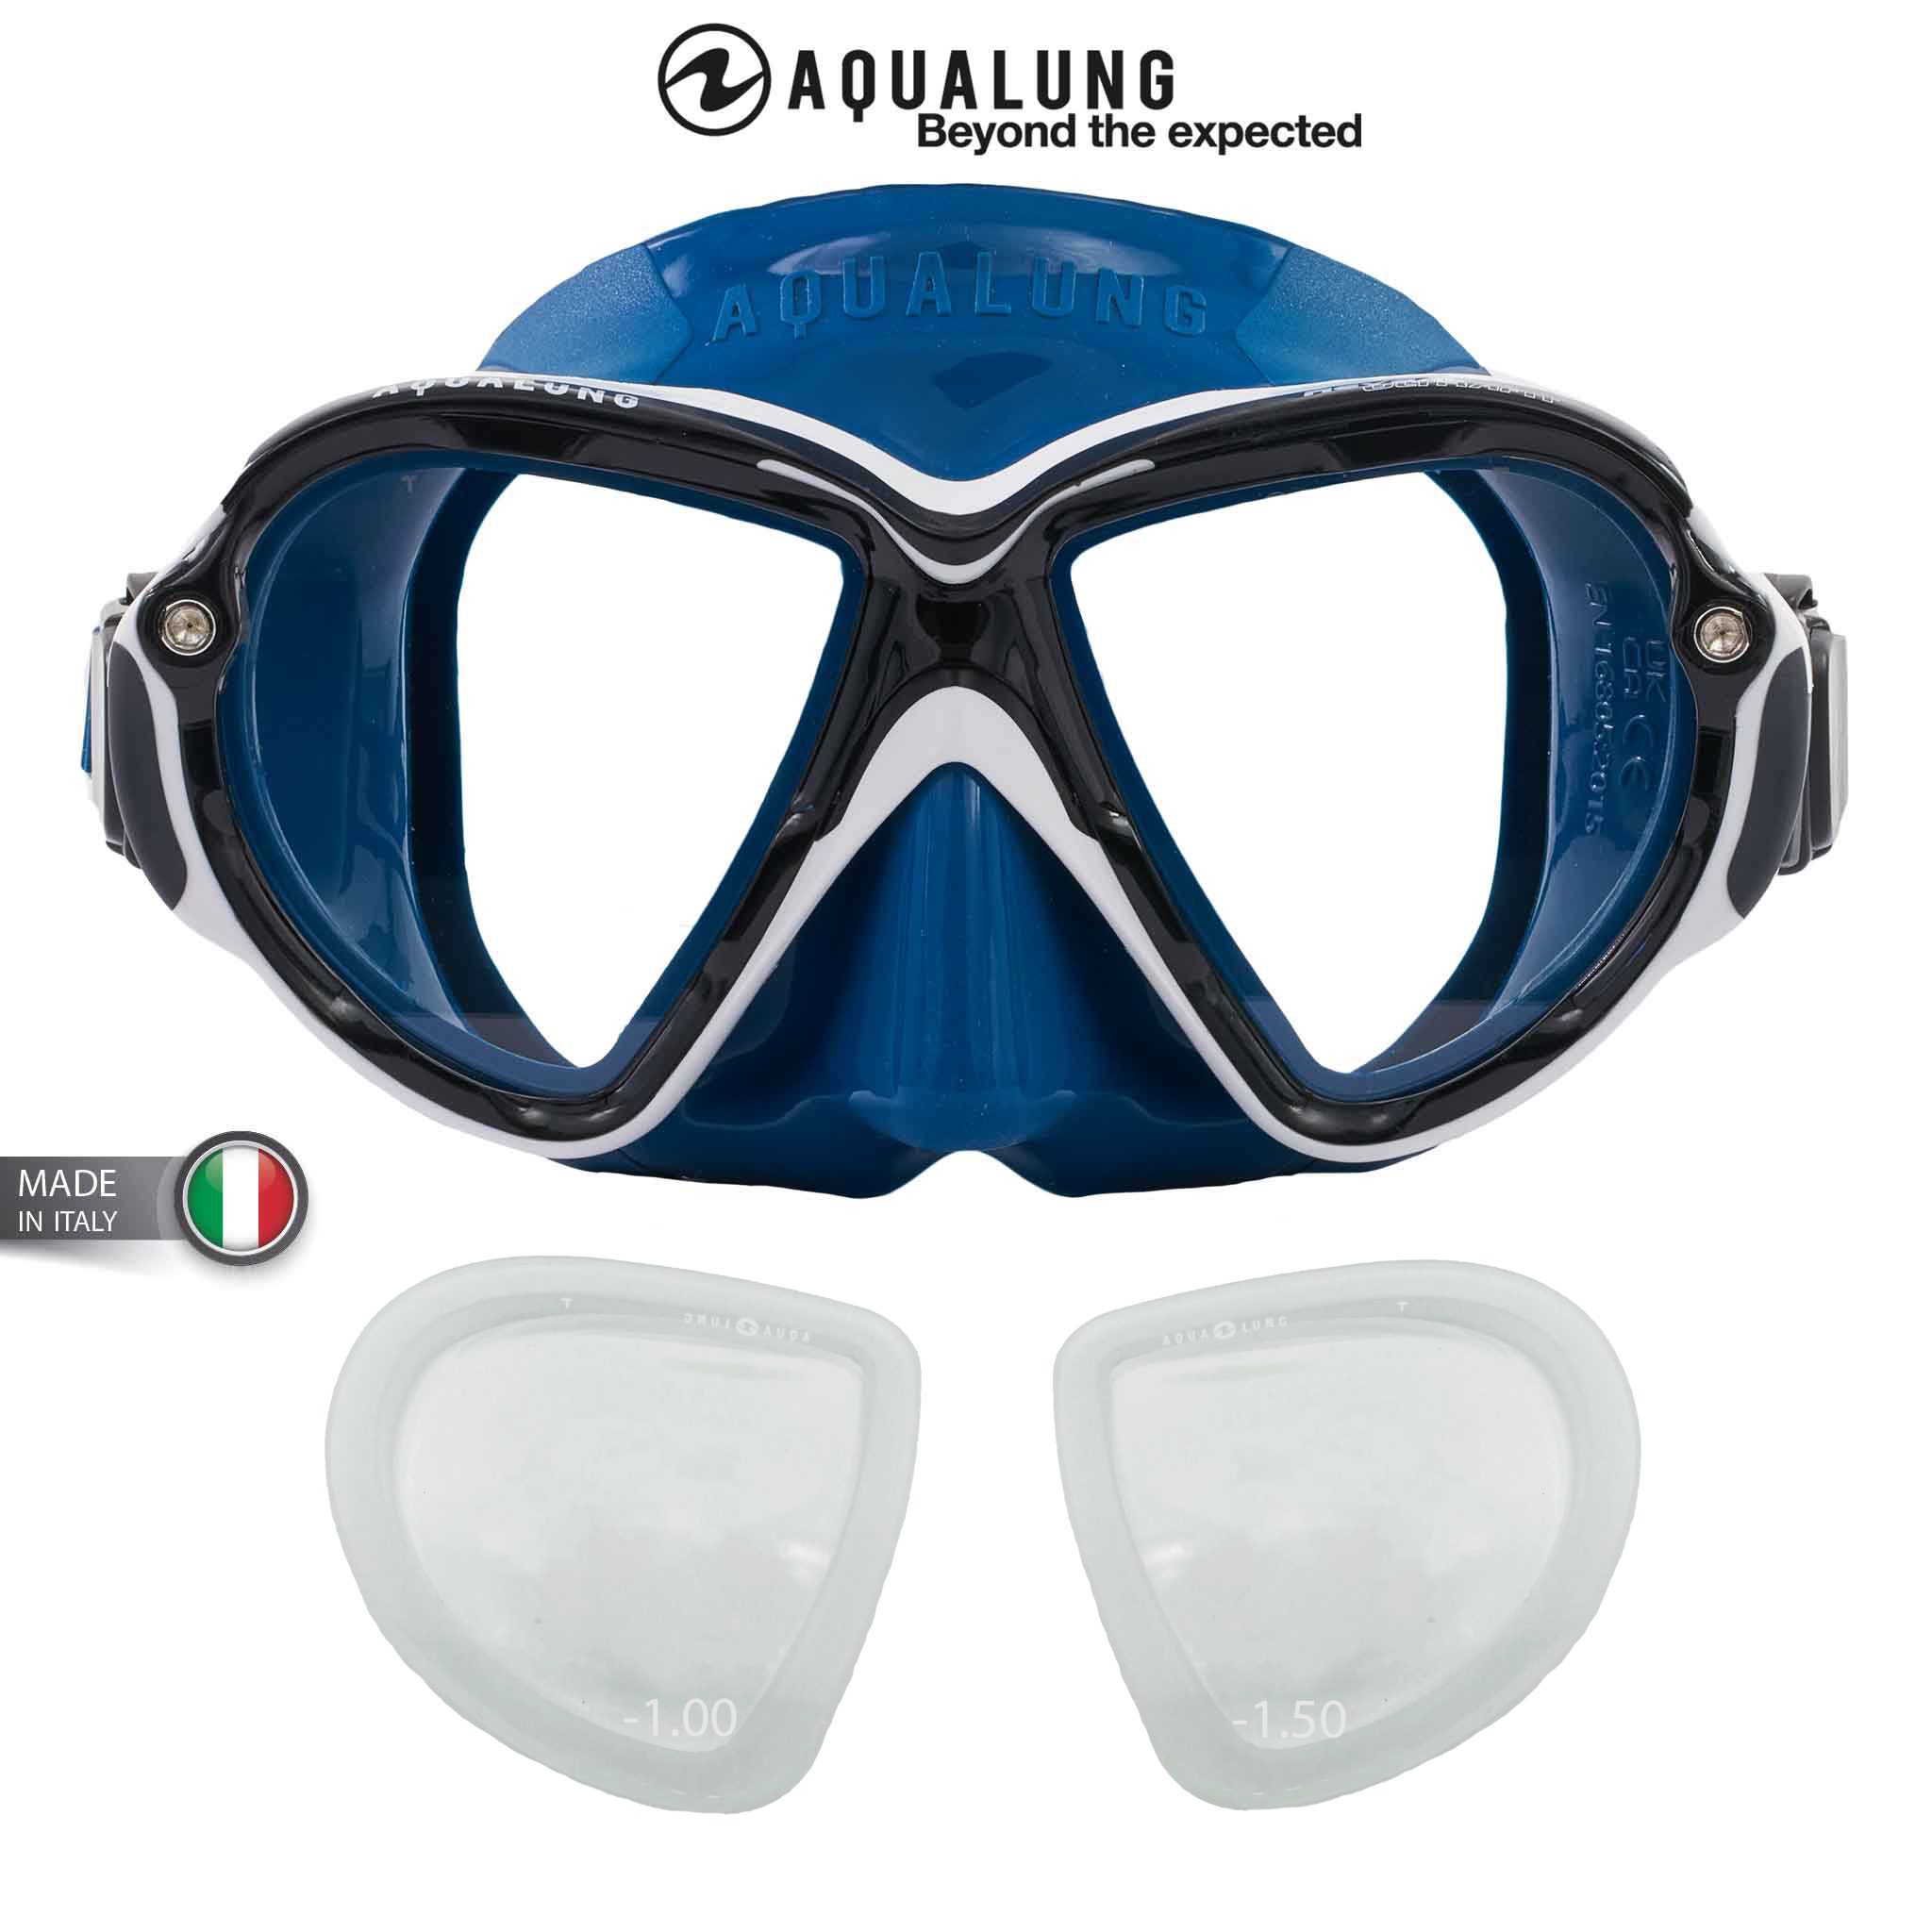 Maui Jr. Kids Prescription Diving Snorkeling Mask by Deep Blue Gear